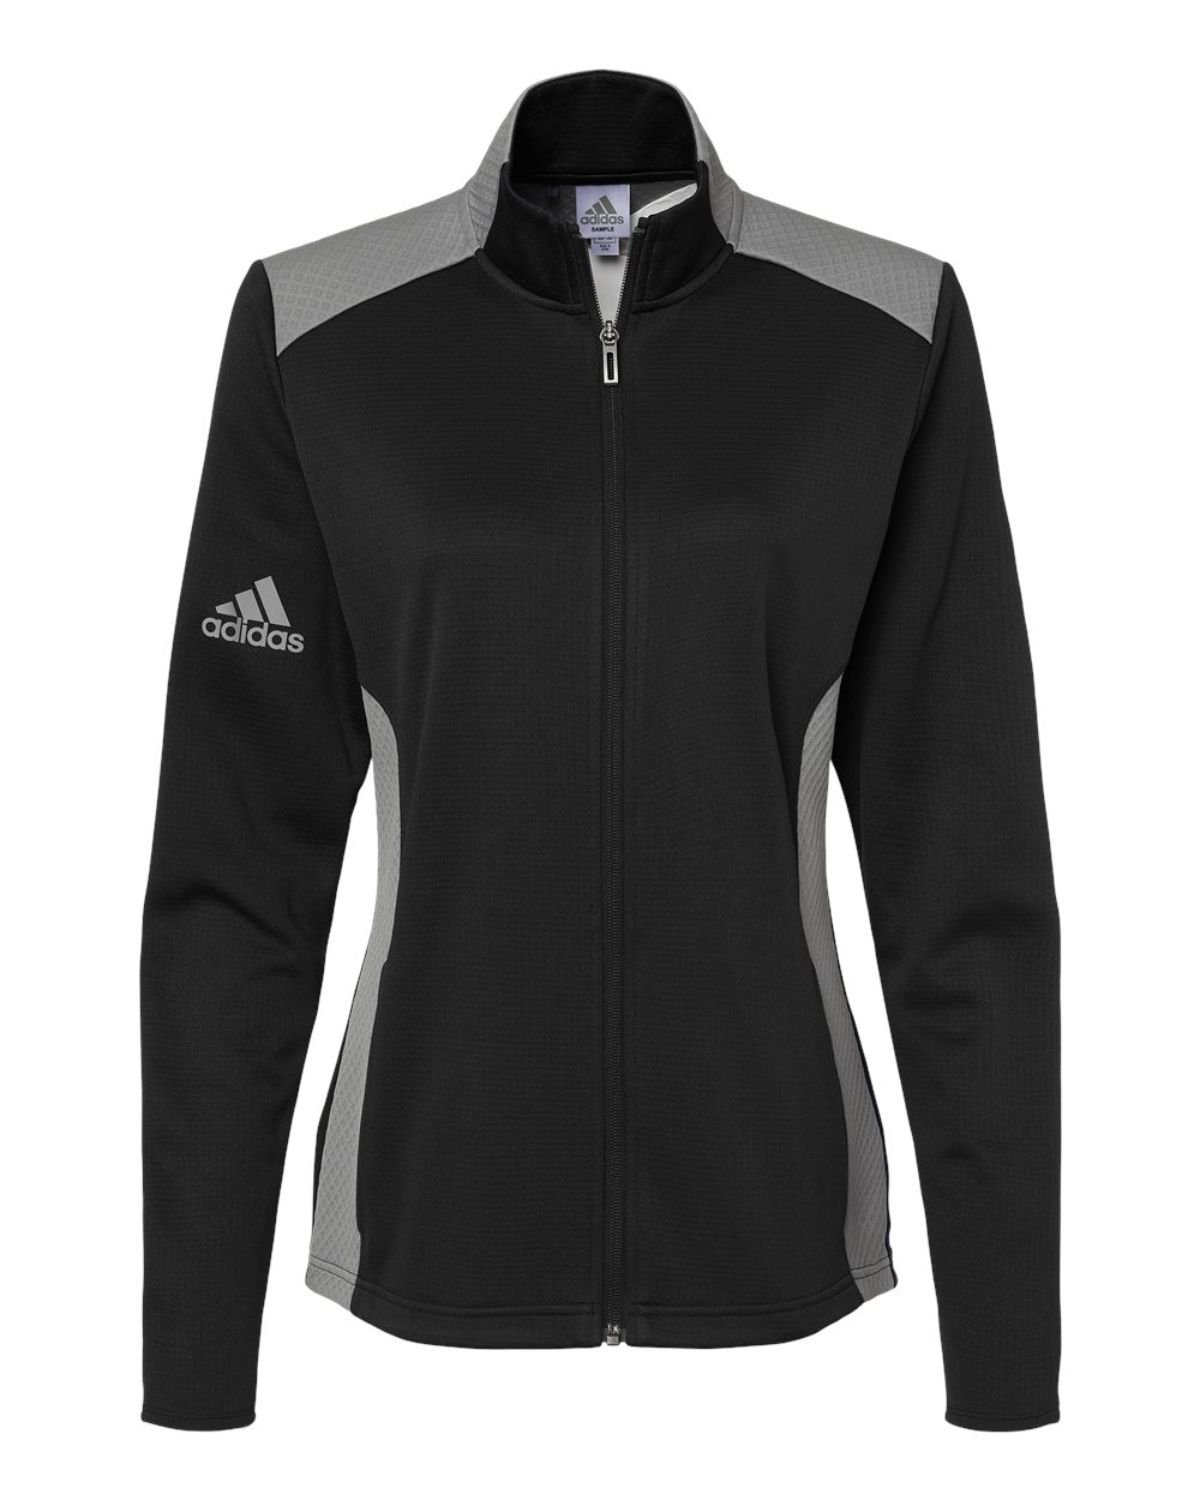 Adidas Golf A529 Women Textured Mixed Media Full-Zip Jacket